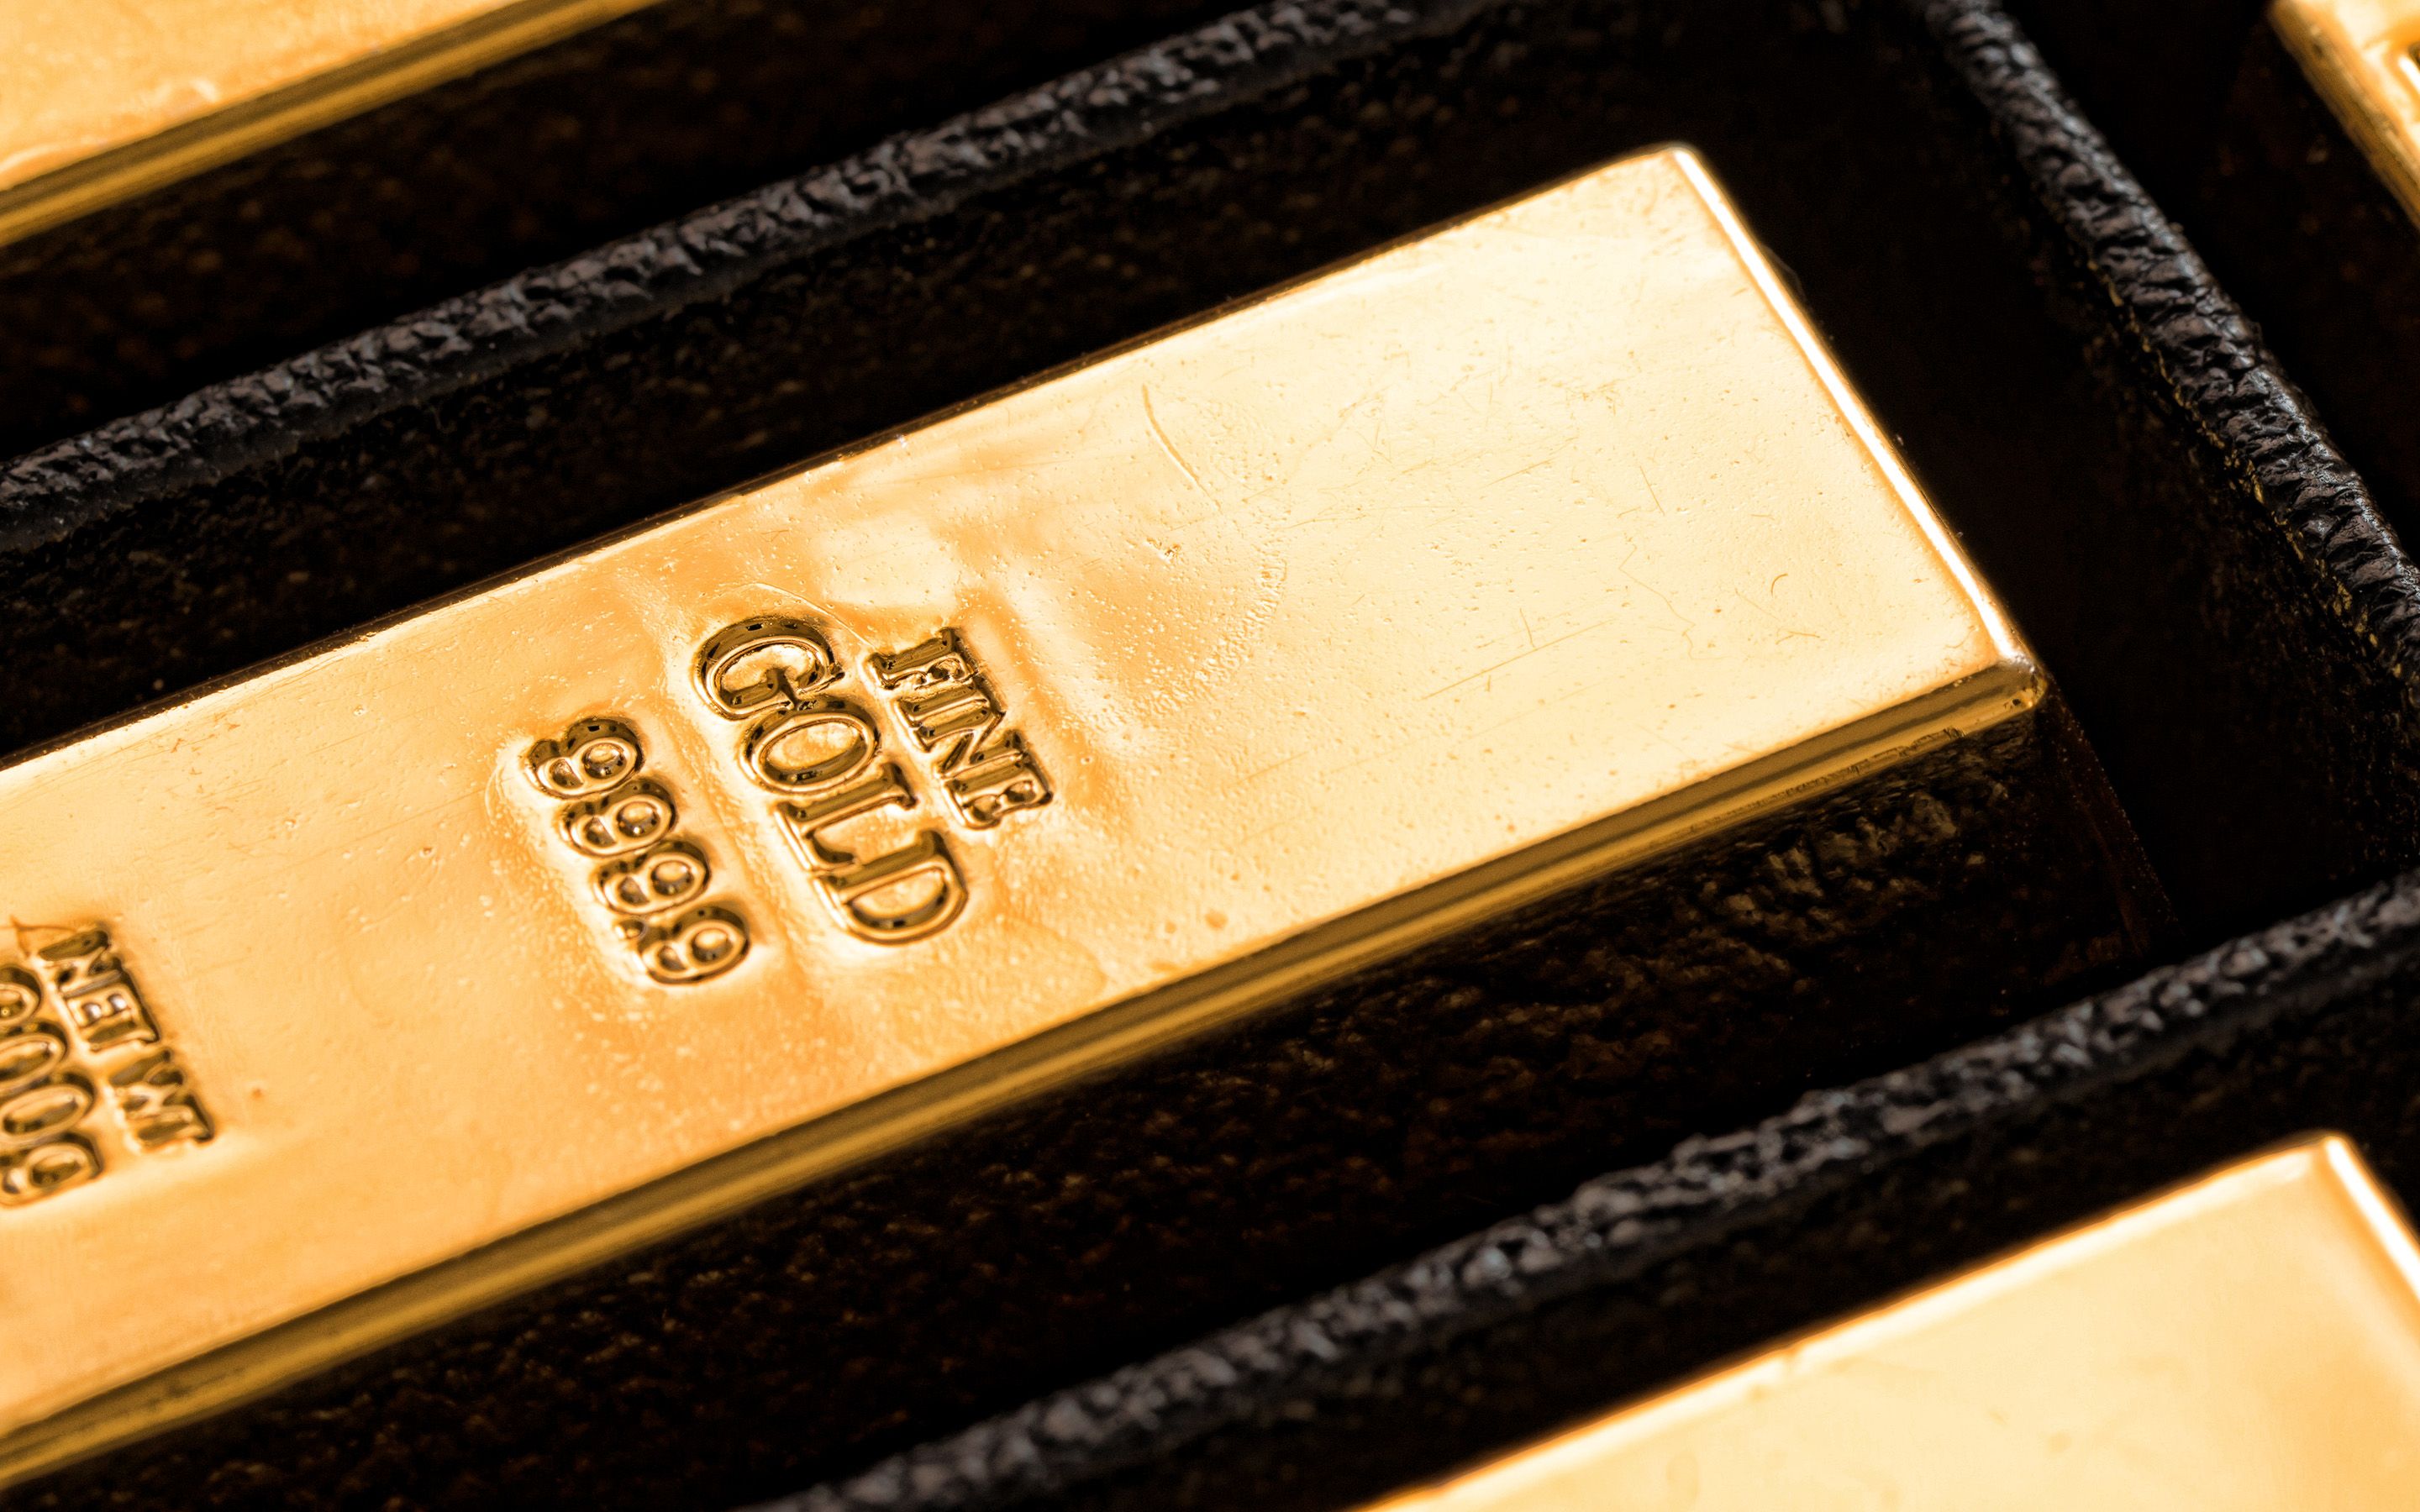 Download wallpaper gold bar, gold bullion, finance concepts, gold